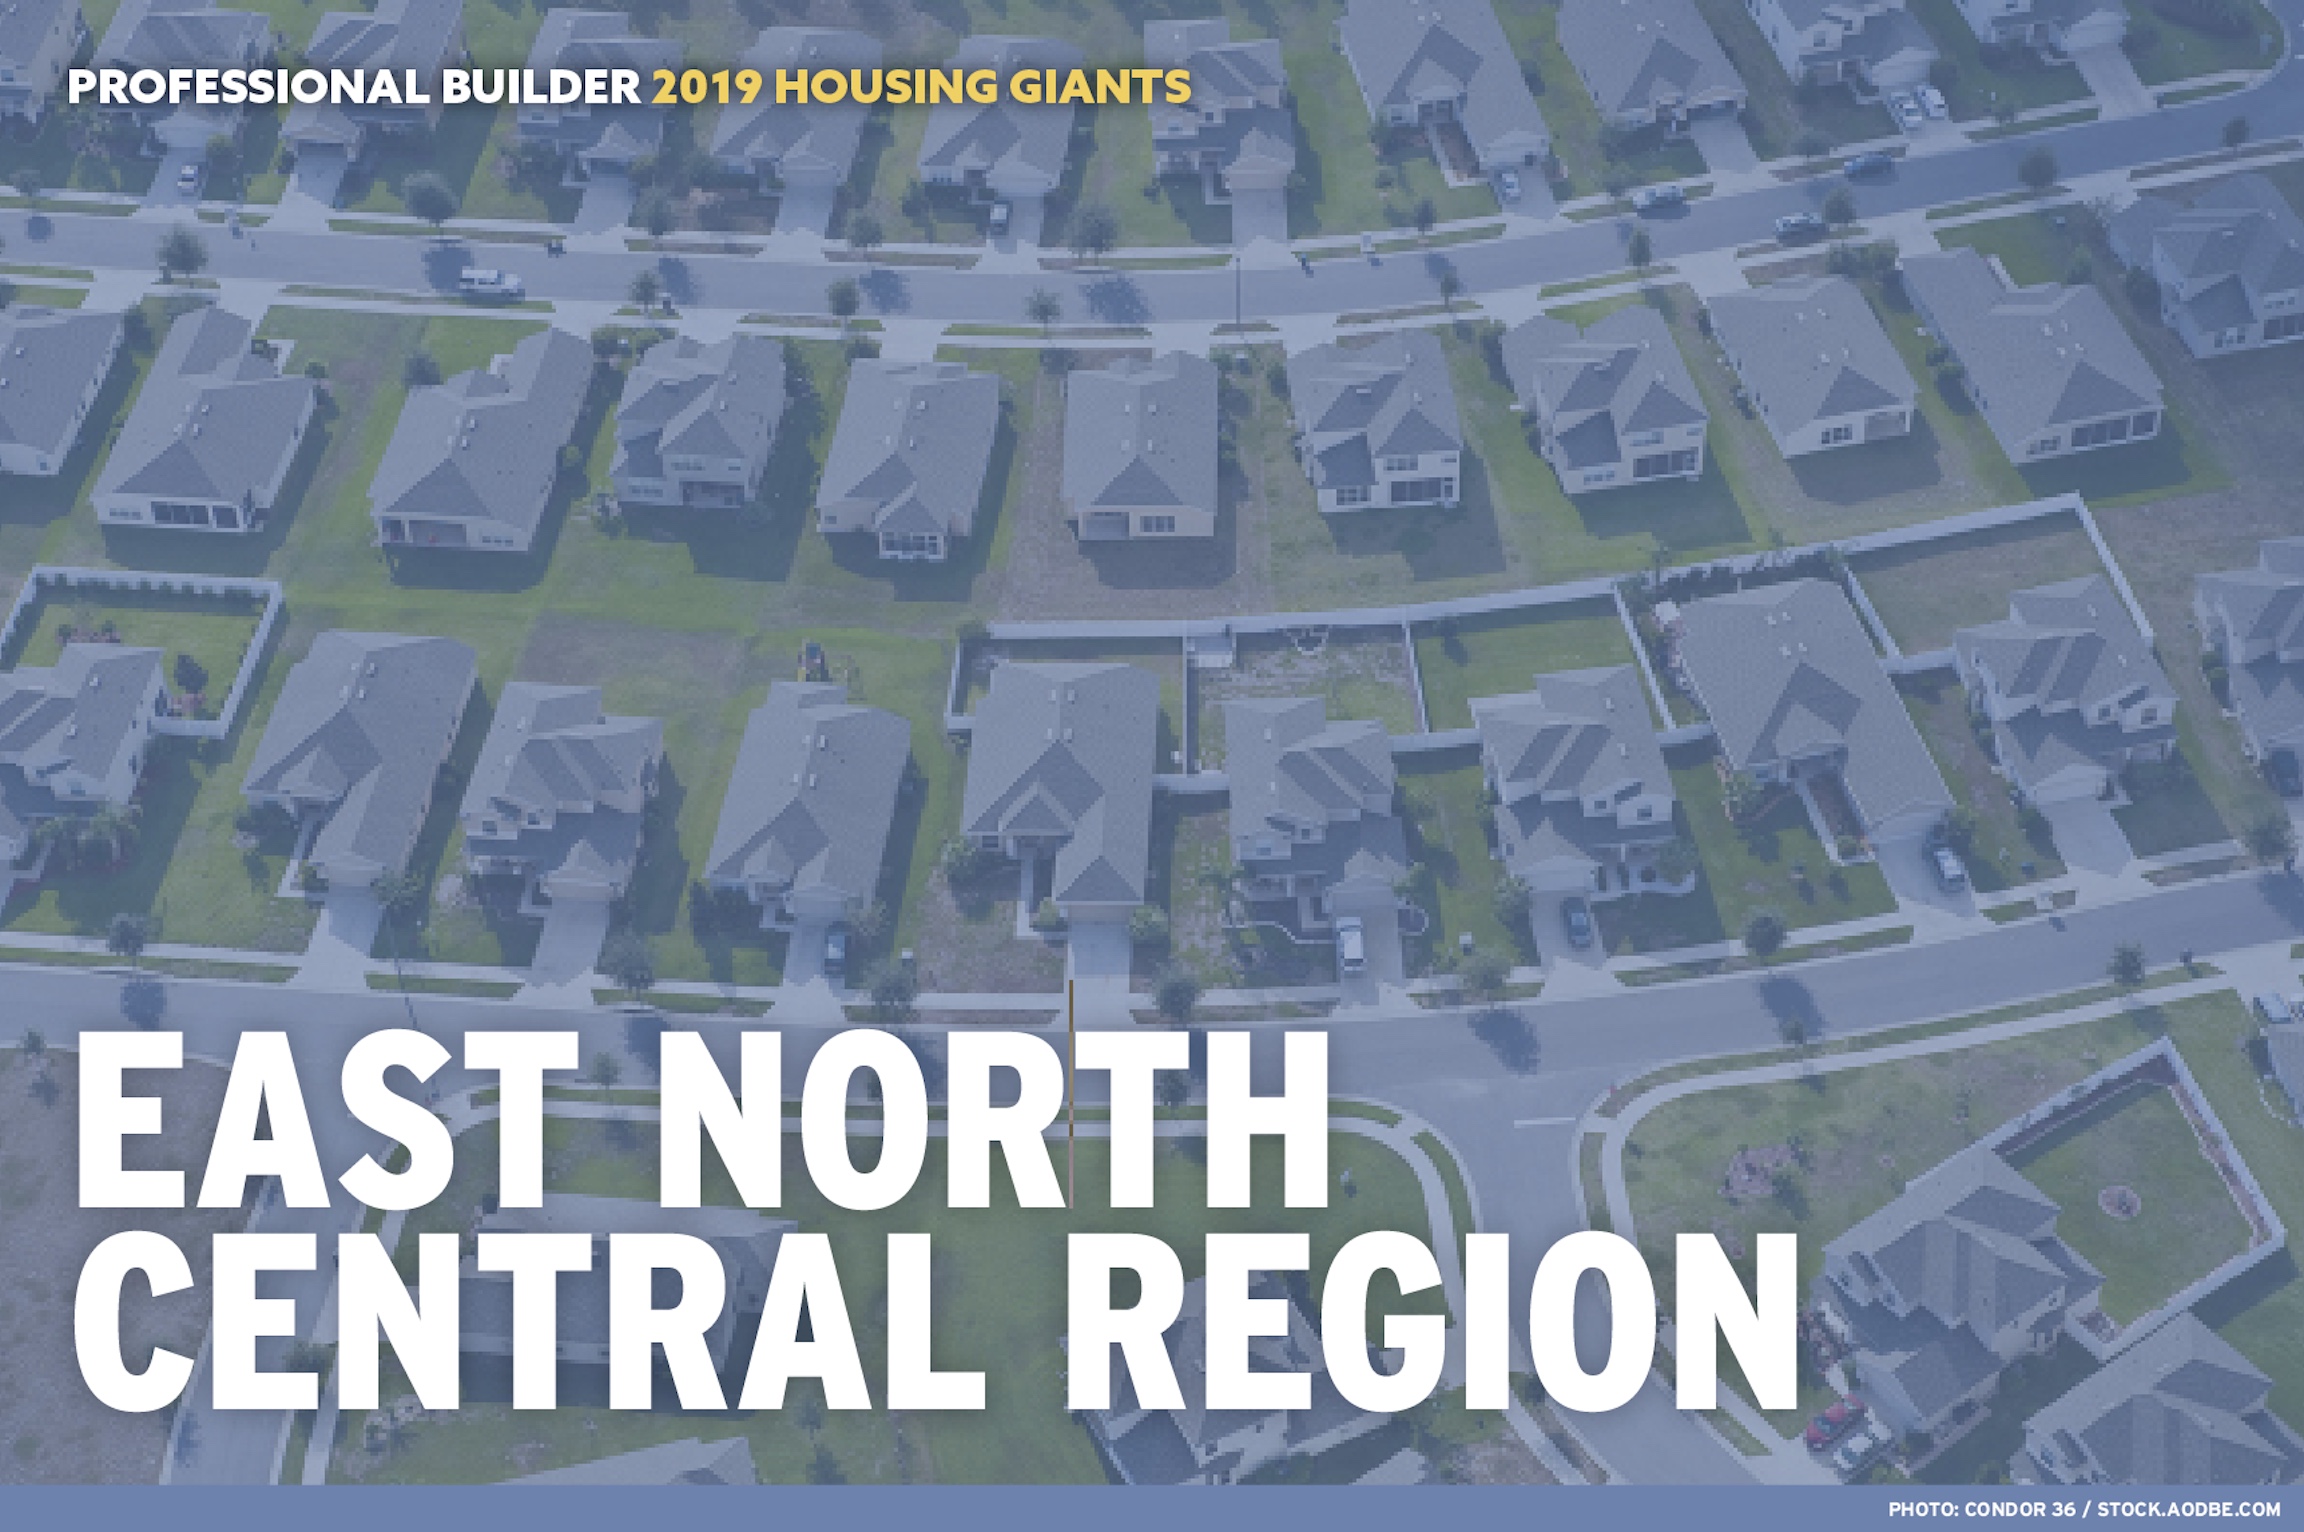 2019 housing giants aerial view of new housing development